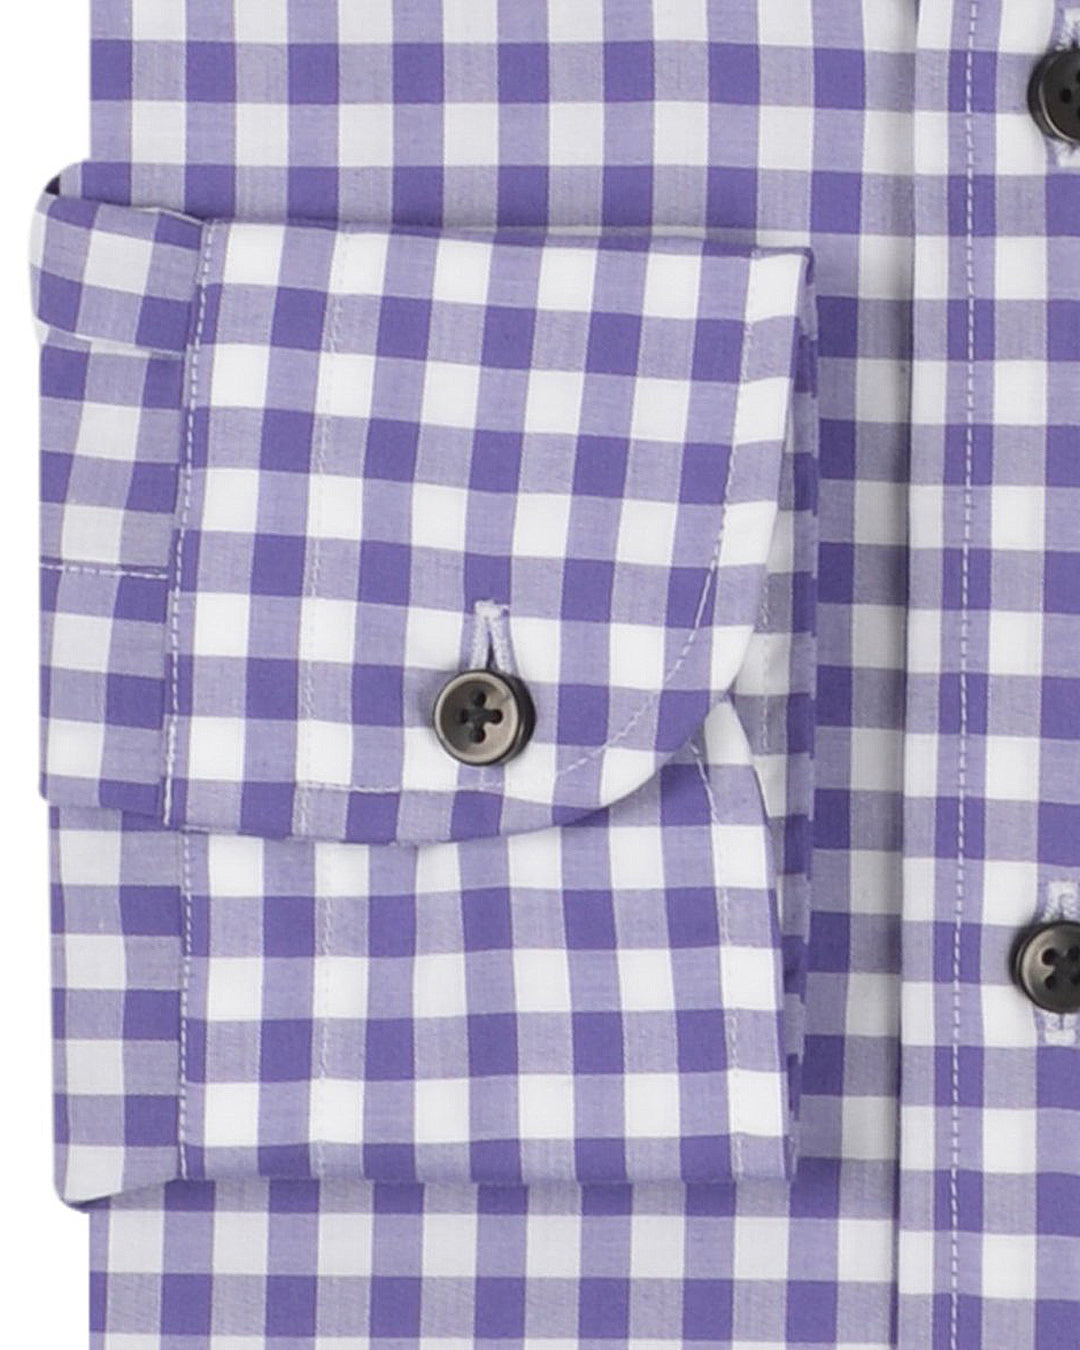 Broad purple Gingham Checks on White